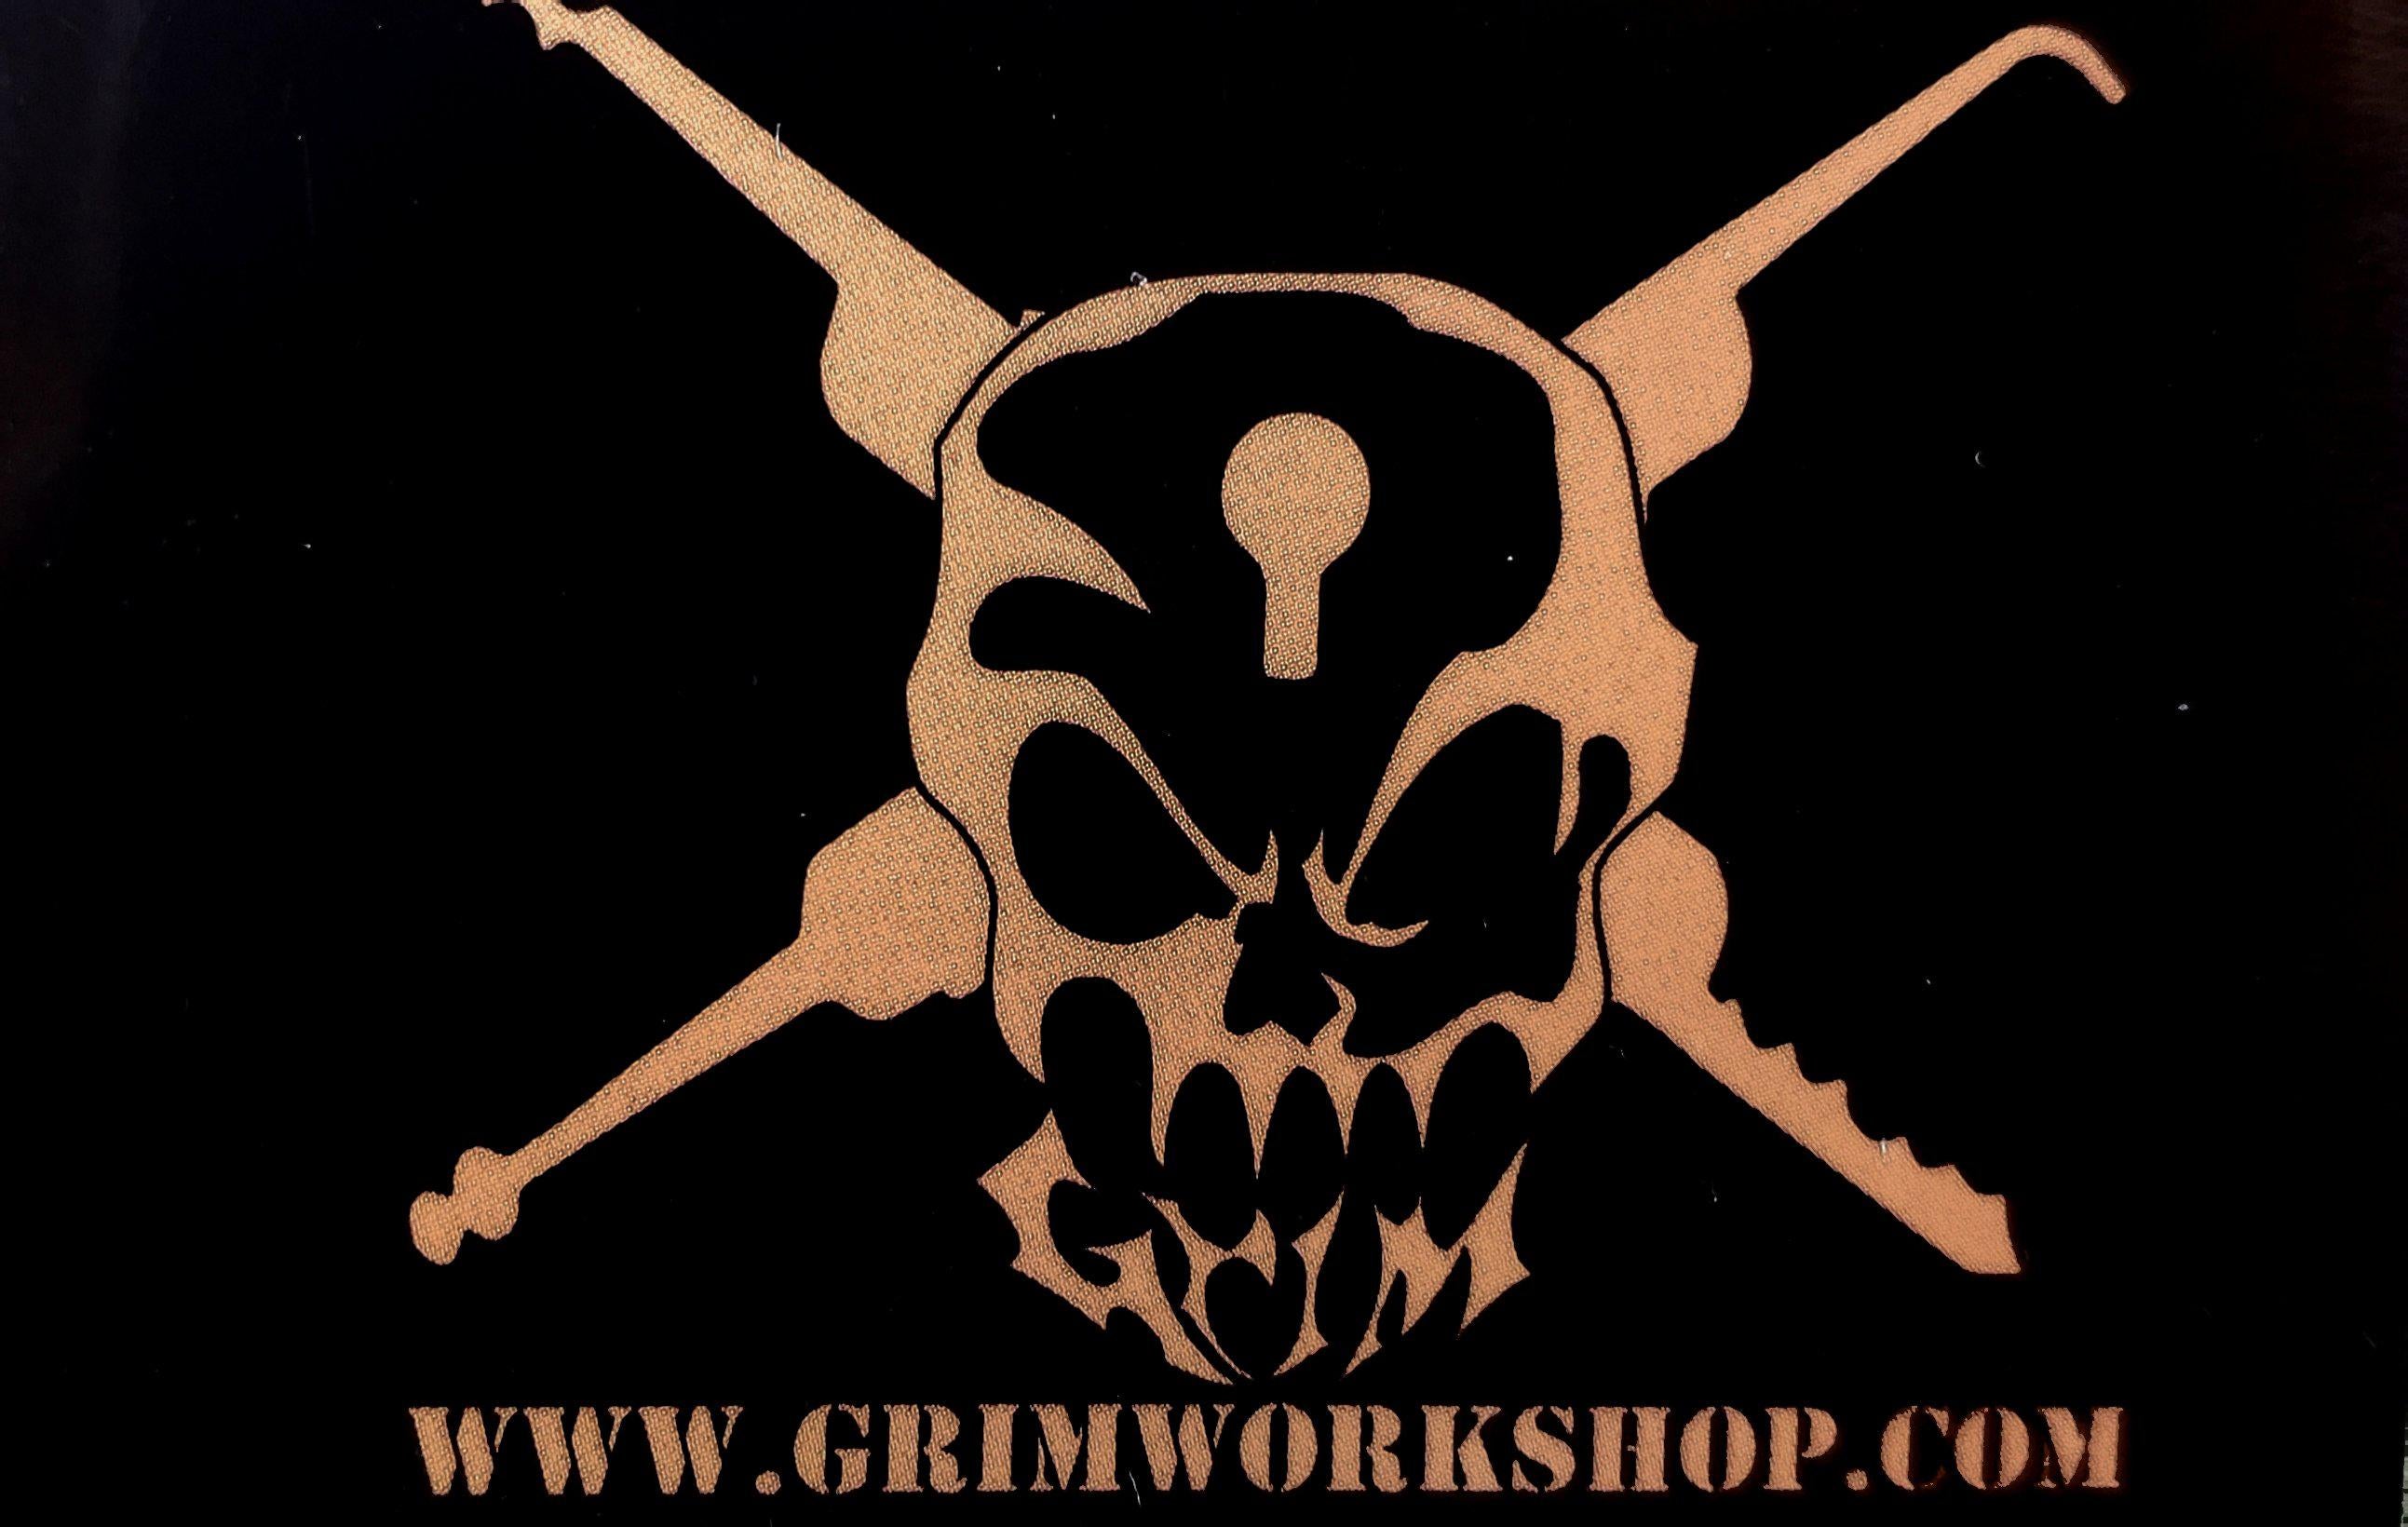 Grim Tin Lock Pick Sticker-Grimworkshop-bugoutbag-bushcraft-edc-gear-edctool-everydaycarry-survivalcard-survivalkit-wilderness-prepping-toolkit